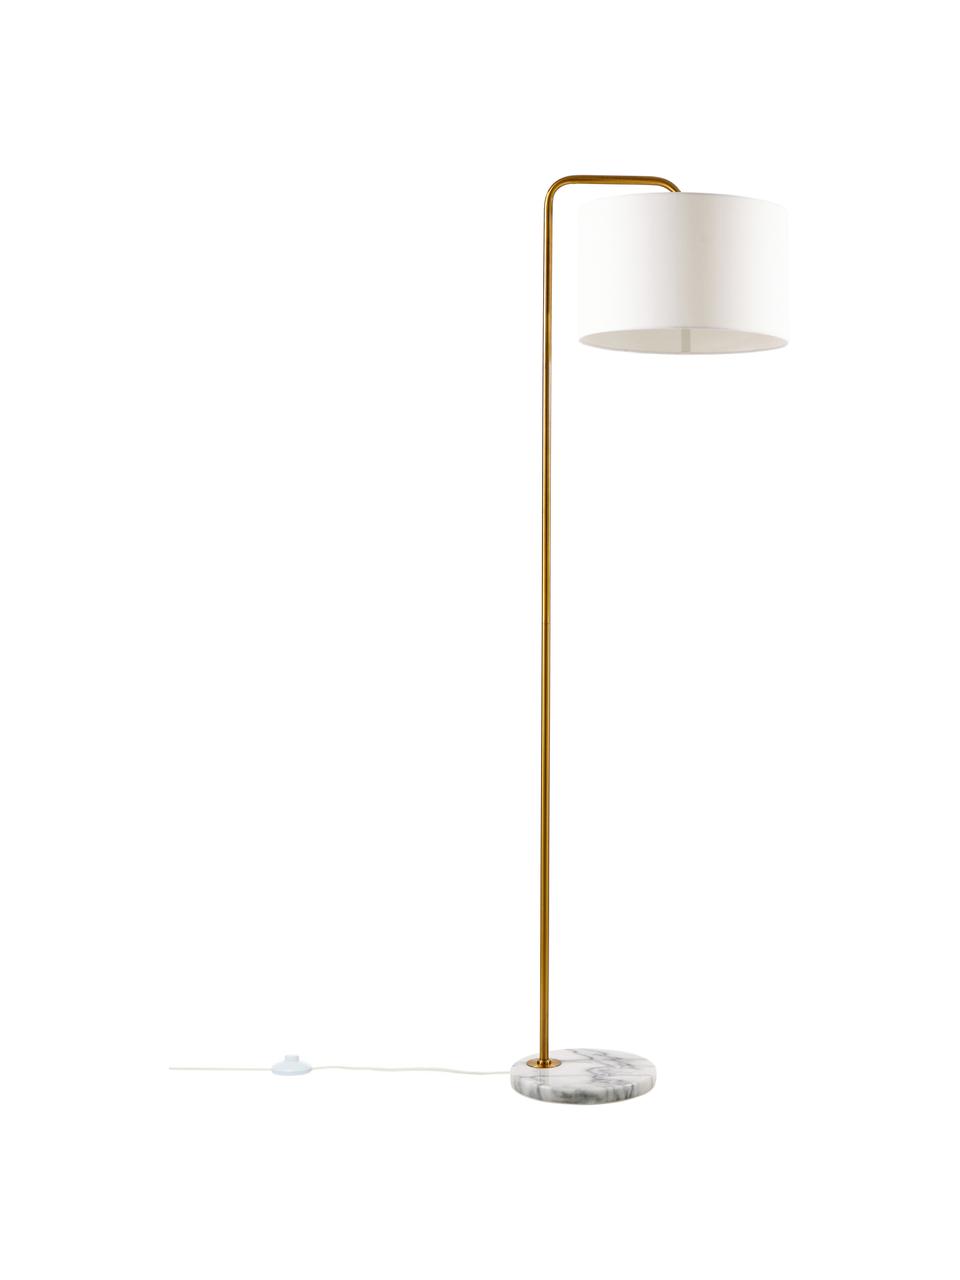 Leeslamp Montreal met marmeren voet, Lampenkap: textiel, Lampvoet: marmer, Frame: gegalvaniseerd metaal, Wit, goudkleurig, B 44 cm x H 155 cm